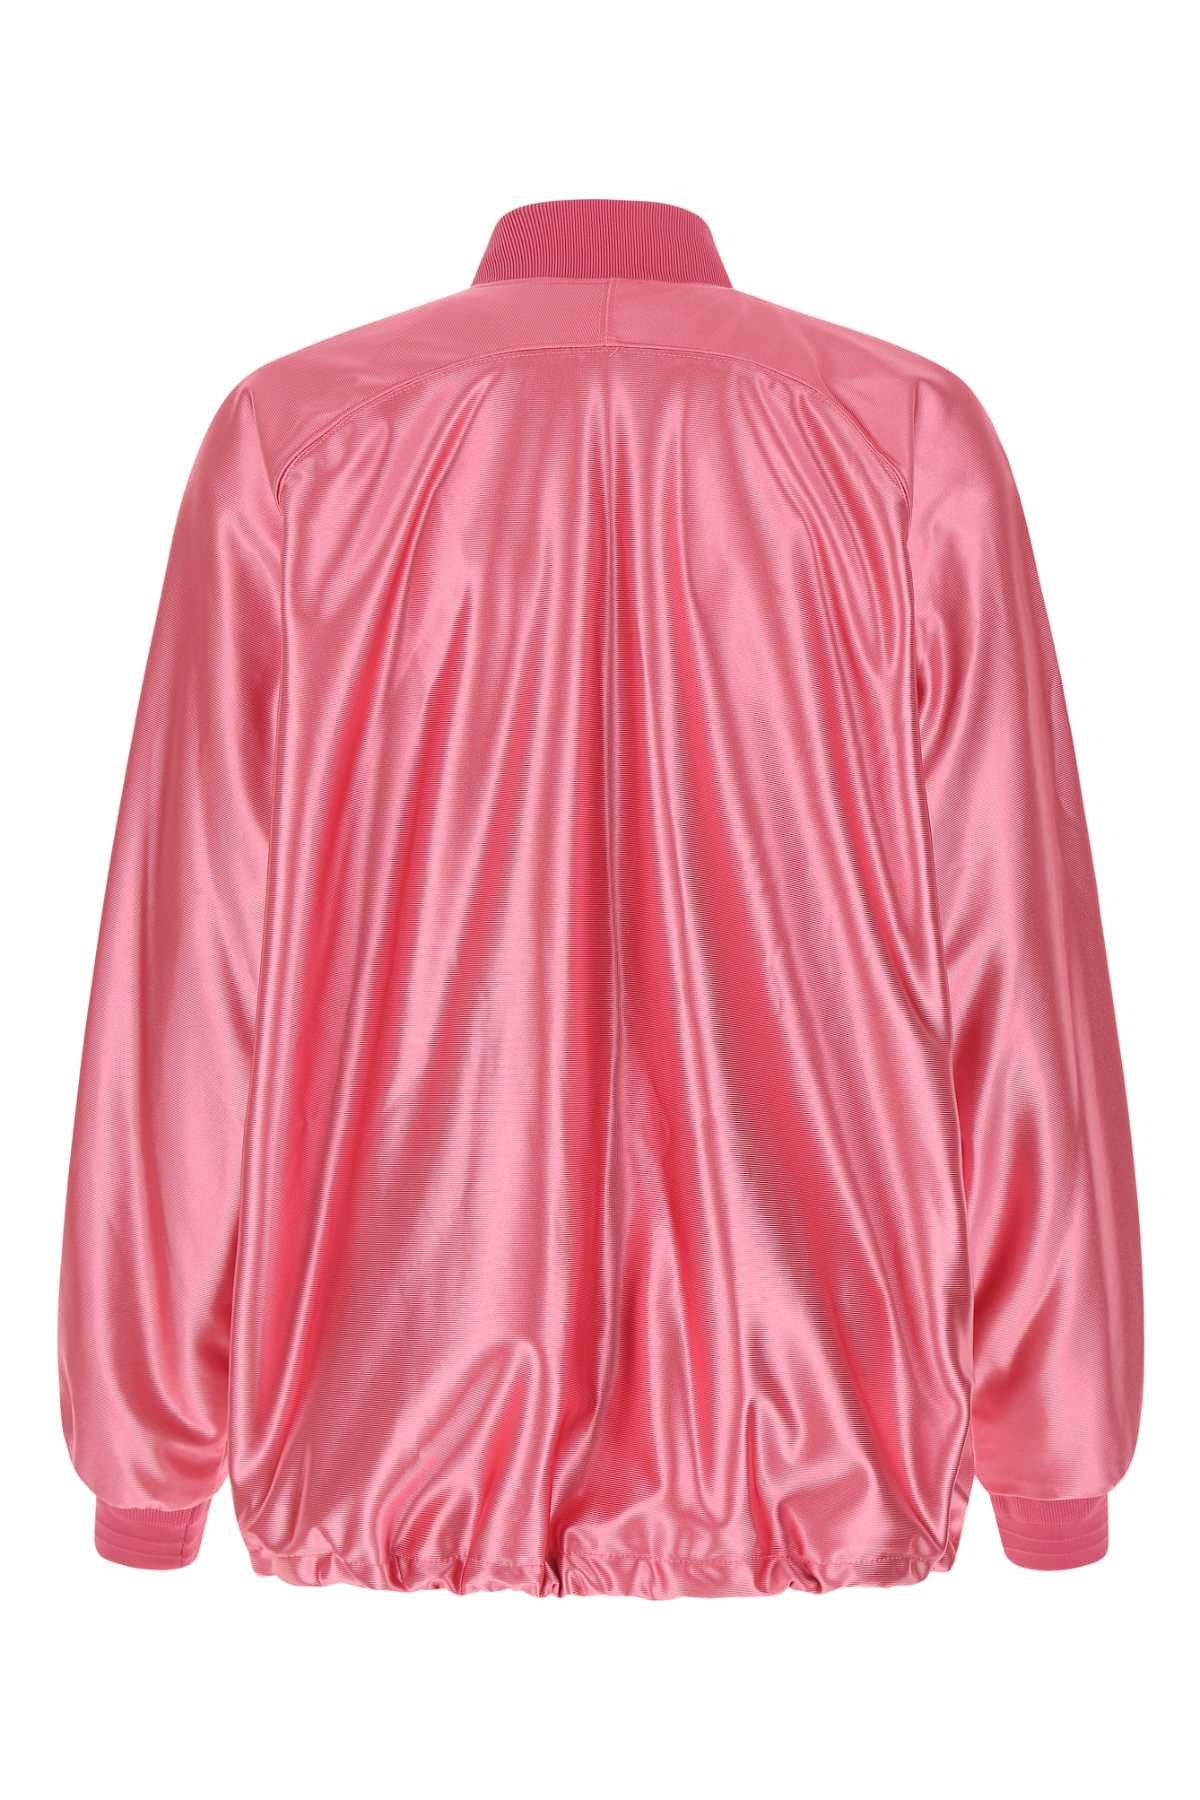 Khrisjoy Pink Polyester Oversize Sweatshirt In Pe8